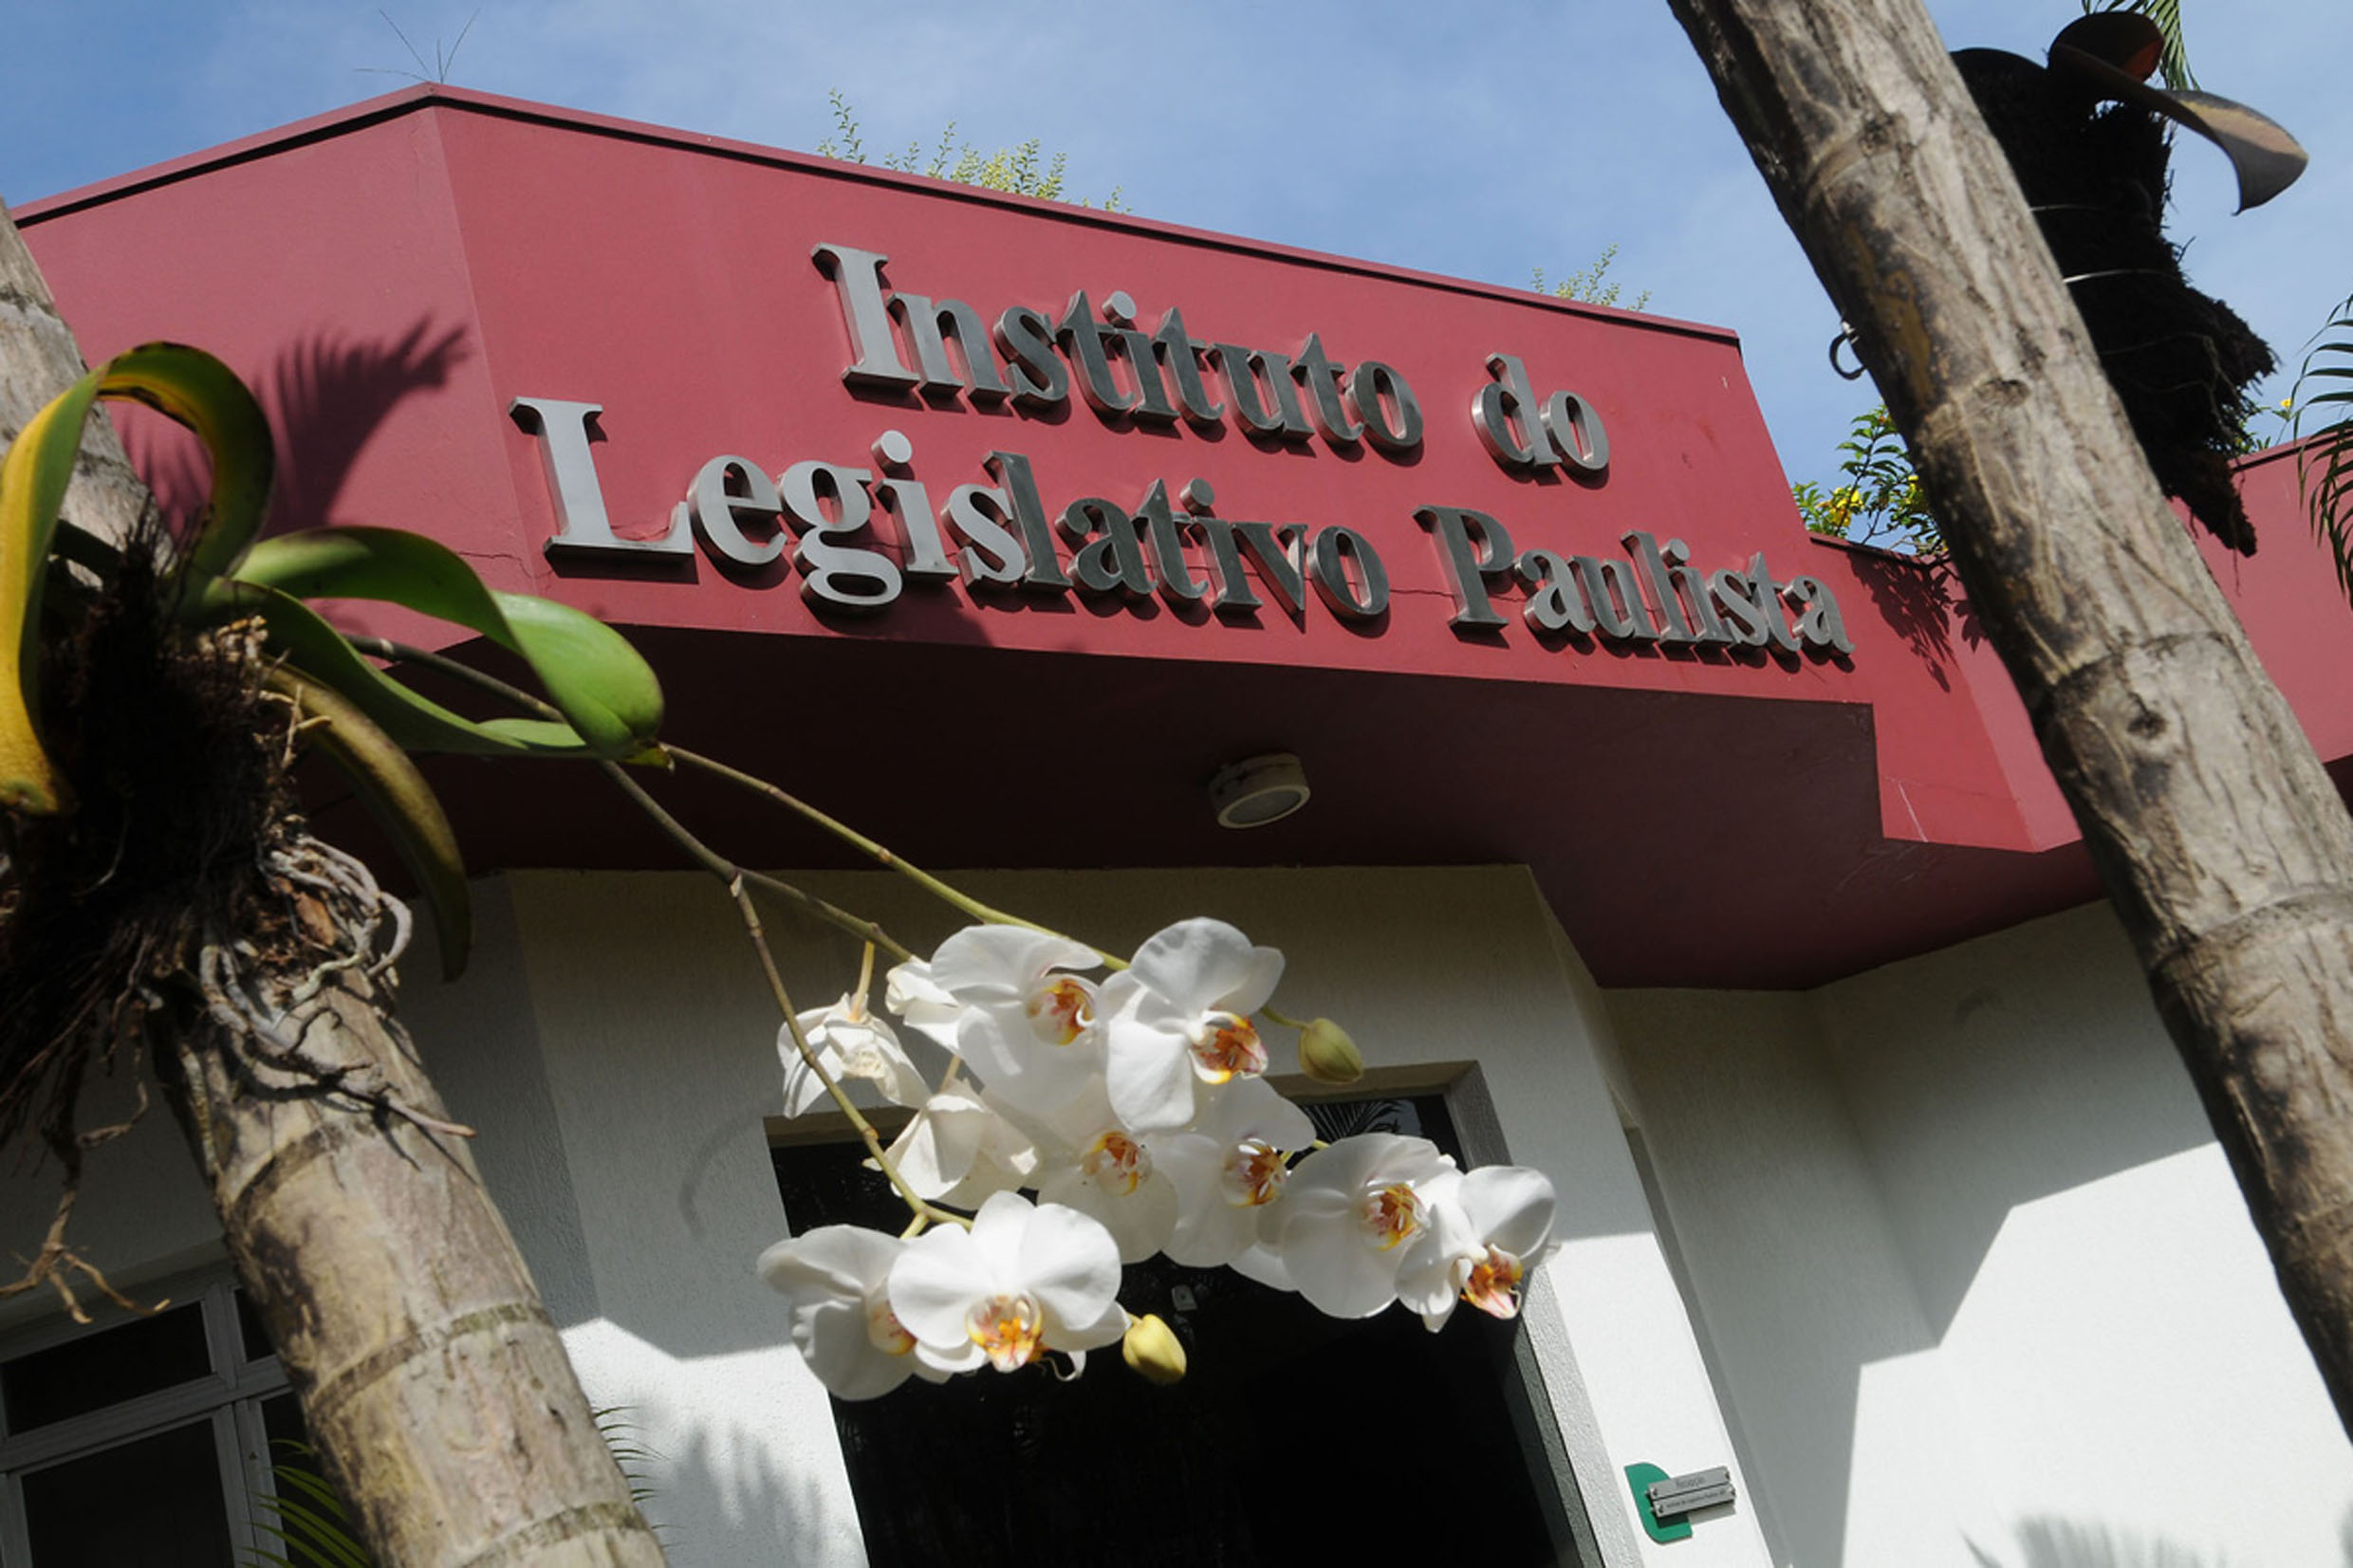 Instituto do Legislativo Paulista<a style='float:right;color:#ccc' href='https://www3.al.sp.gov.br/repositorio/noticia/N-08-2017/fg207153.jpg' target=_blank><i class='bi bi-zoom-in'></i> Clique para ver a imagem </a>